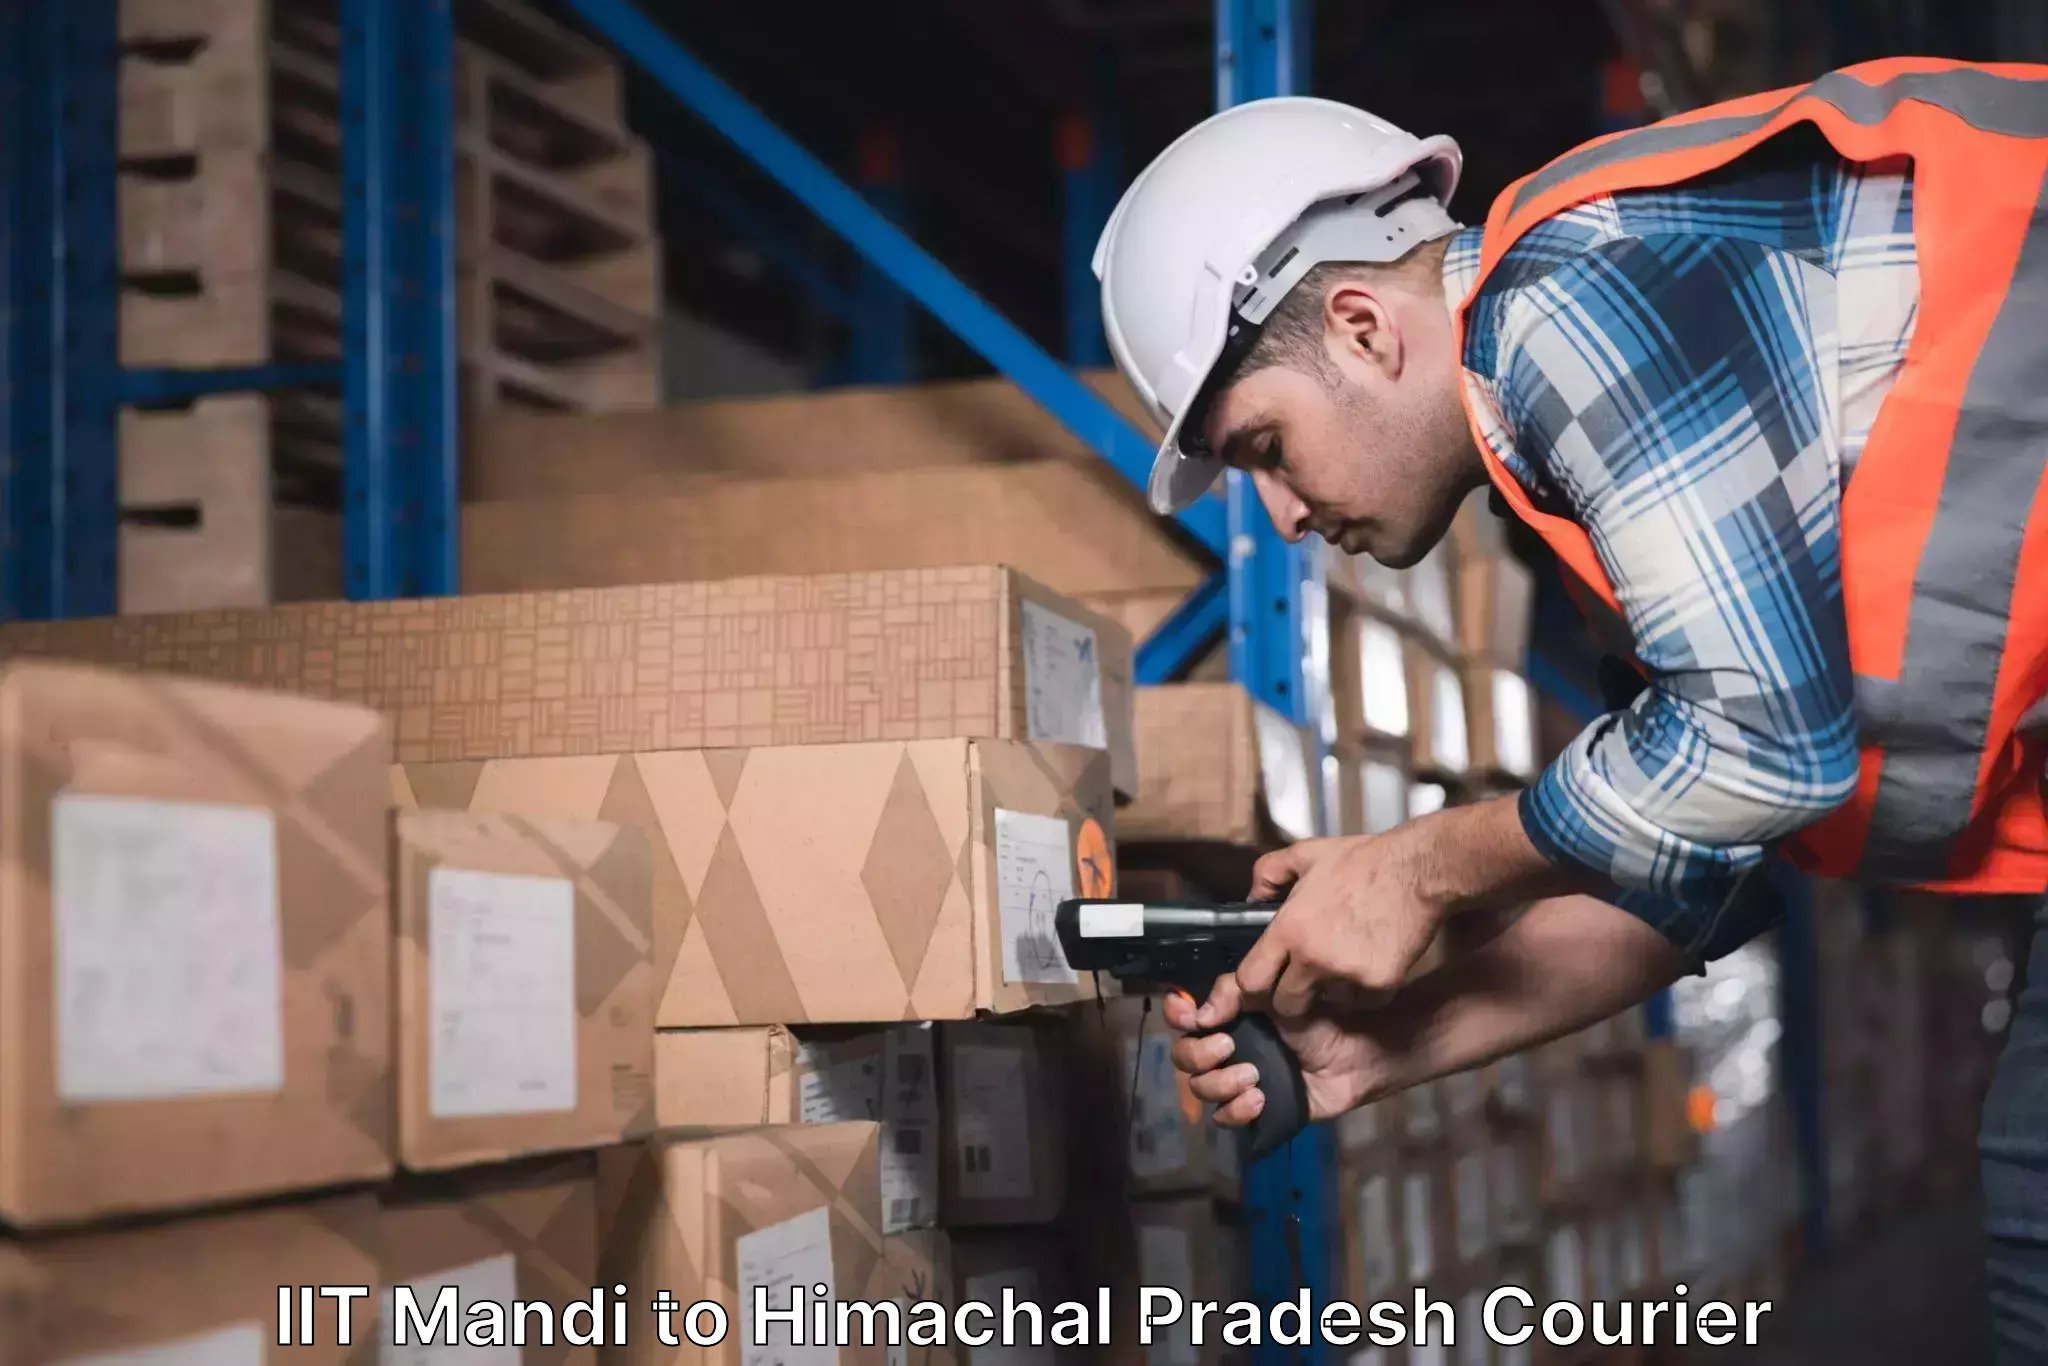 On-call courier service IIT Mandi to Una Himachal Pradesh